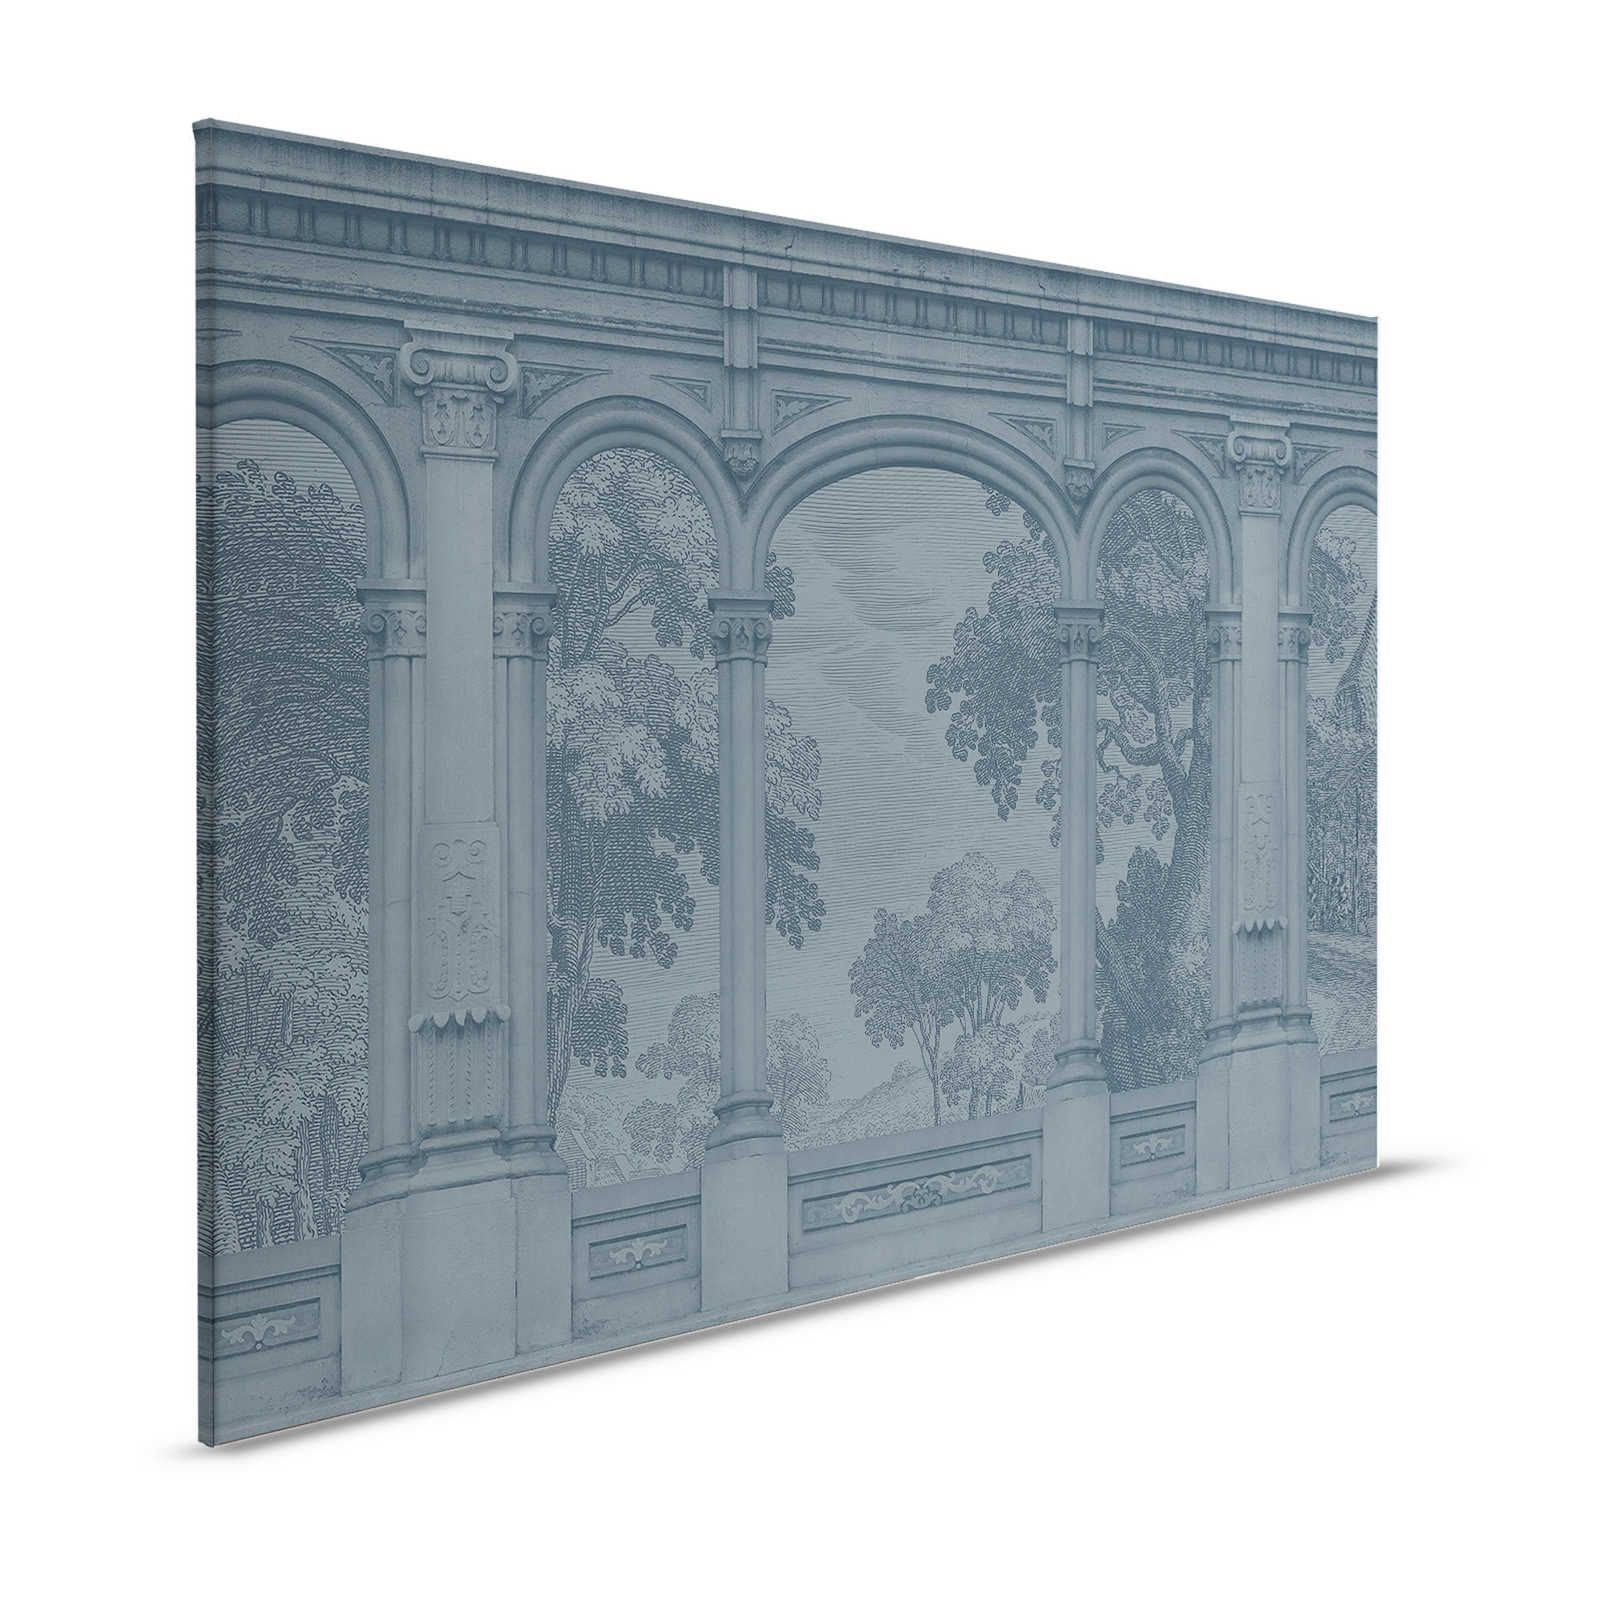 Roma 4 - Canvas painting architecture classic design in anthracite - 1,20 m x 0,80 m
